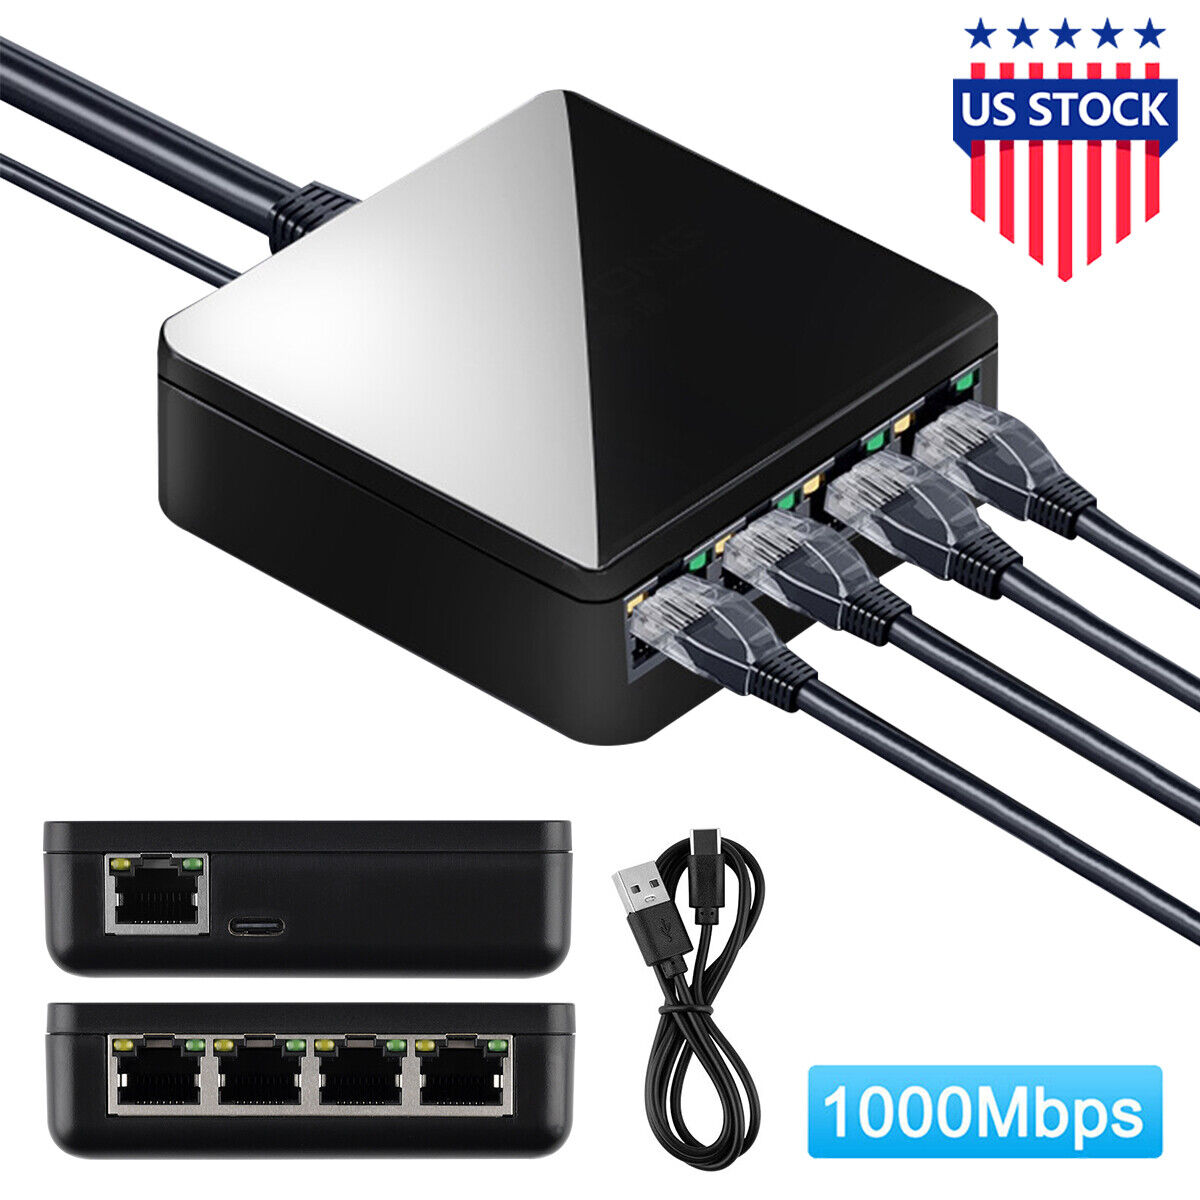 1000Mbps Ethernet Splitter Adapter RJ45 Cable LAN Network Internet 1 TO 4 Ways